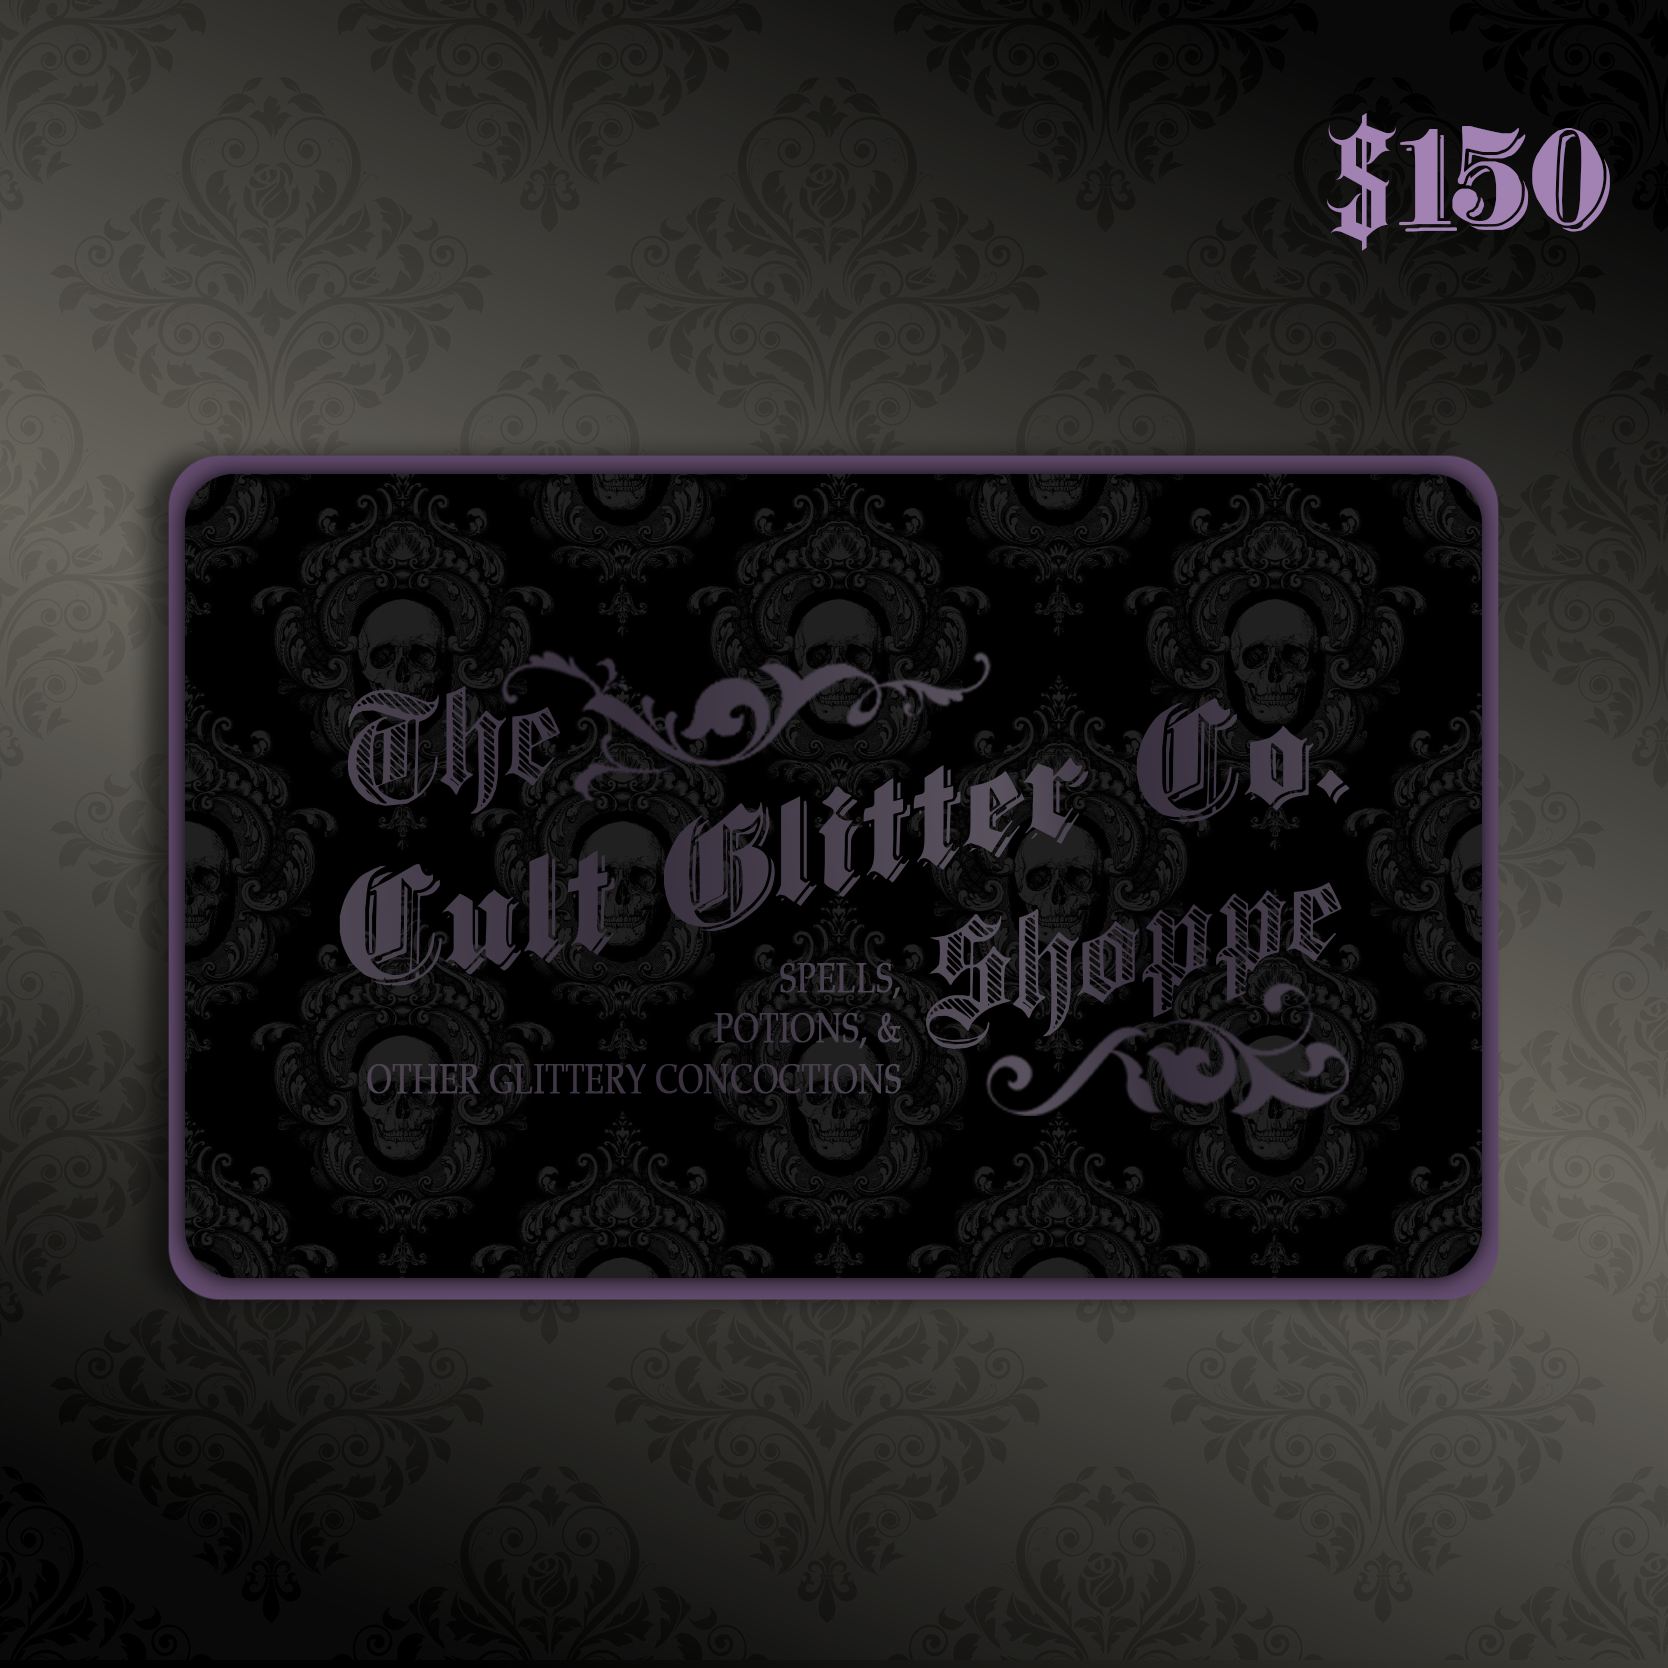 $150 Cult Glitter Gift Card